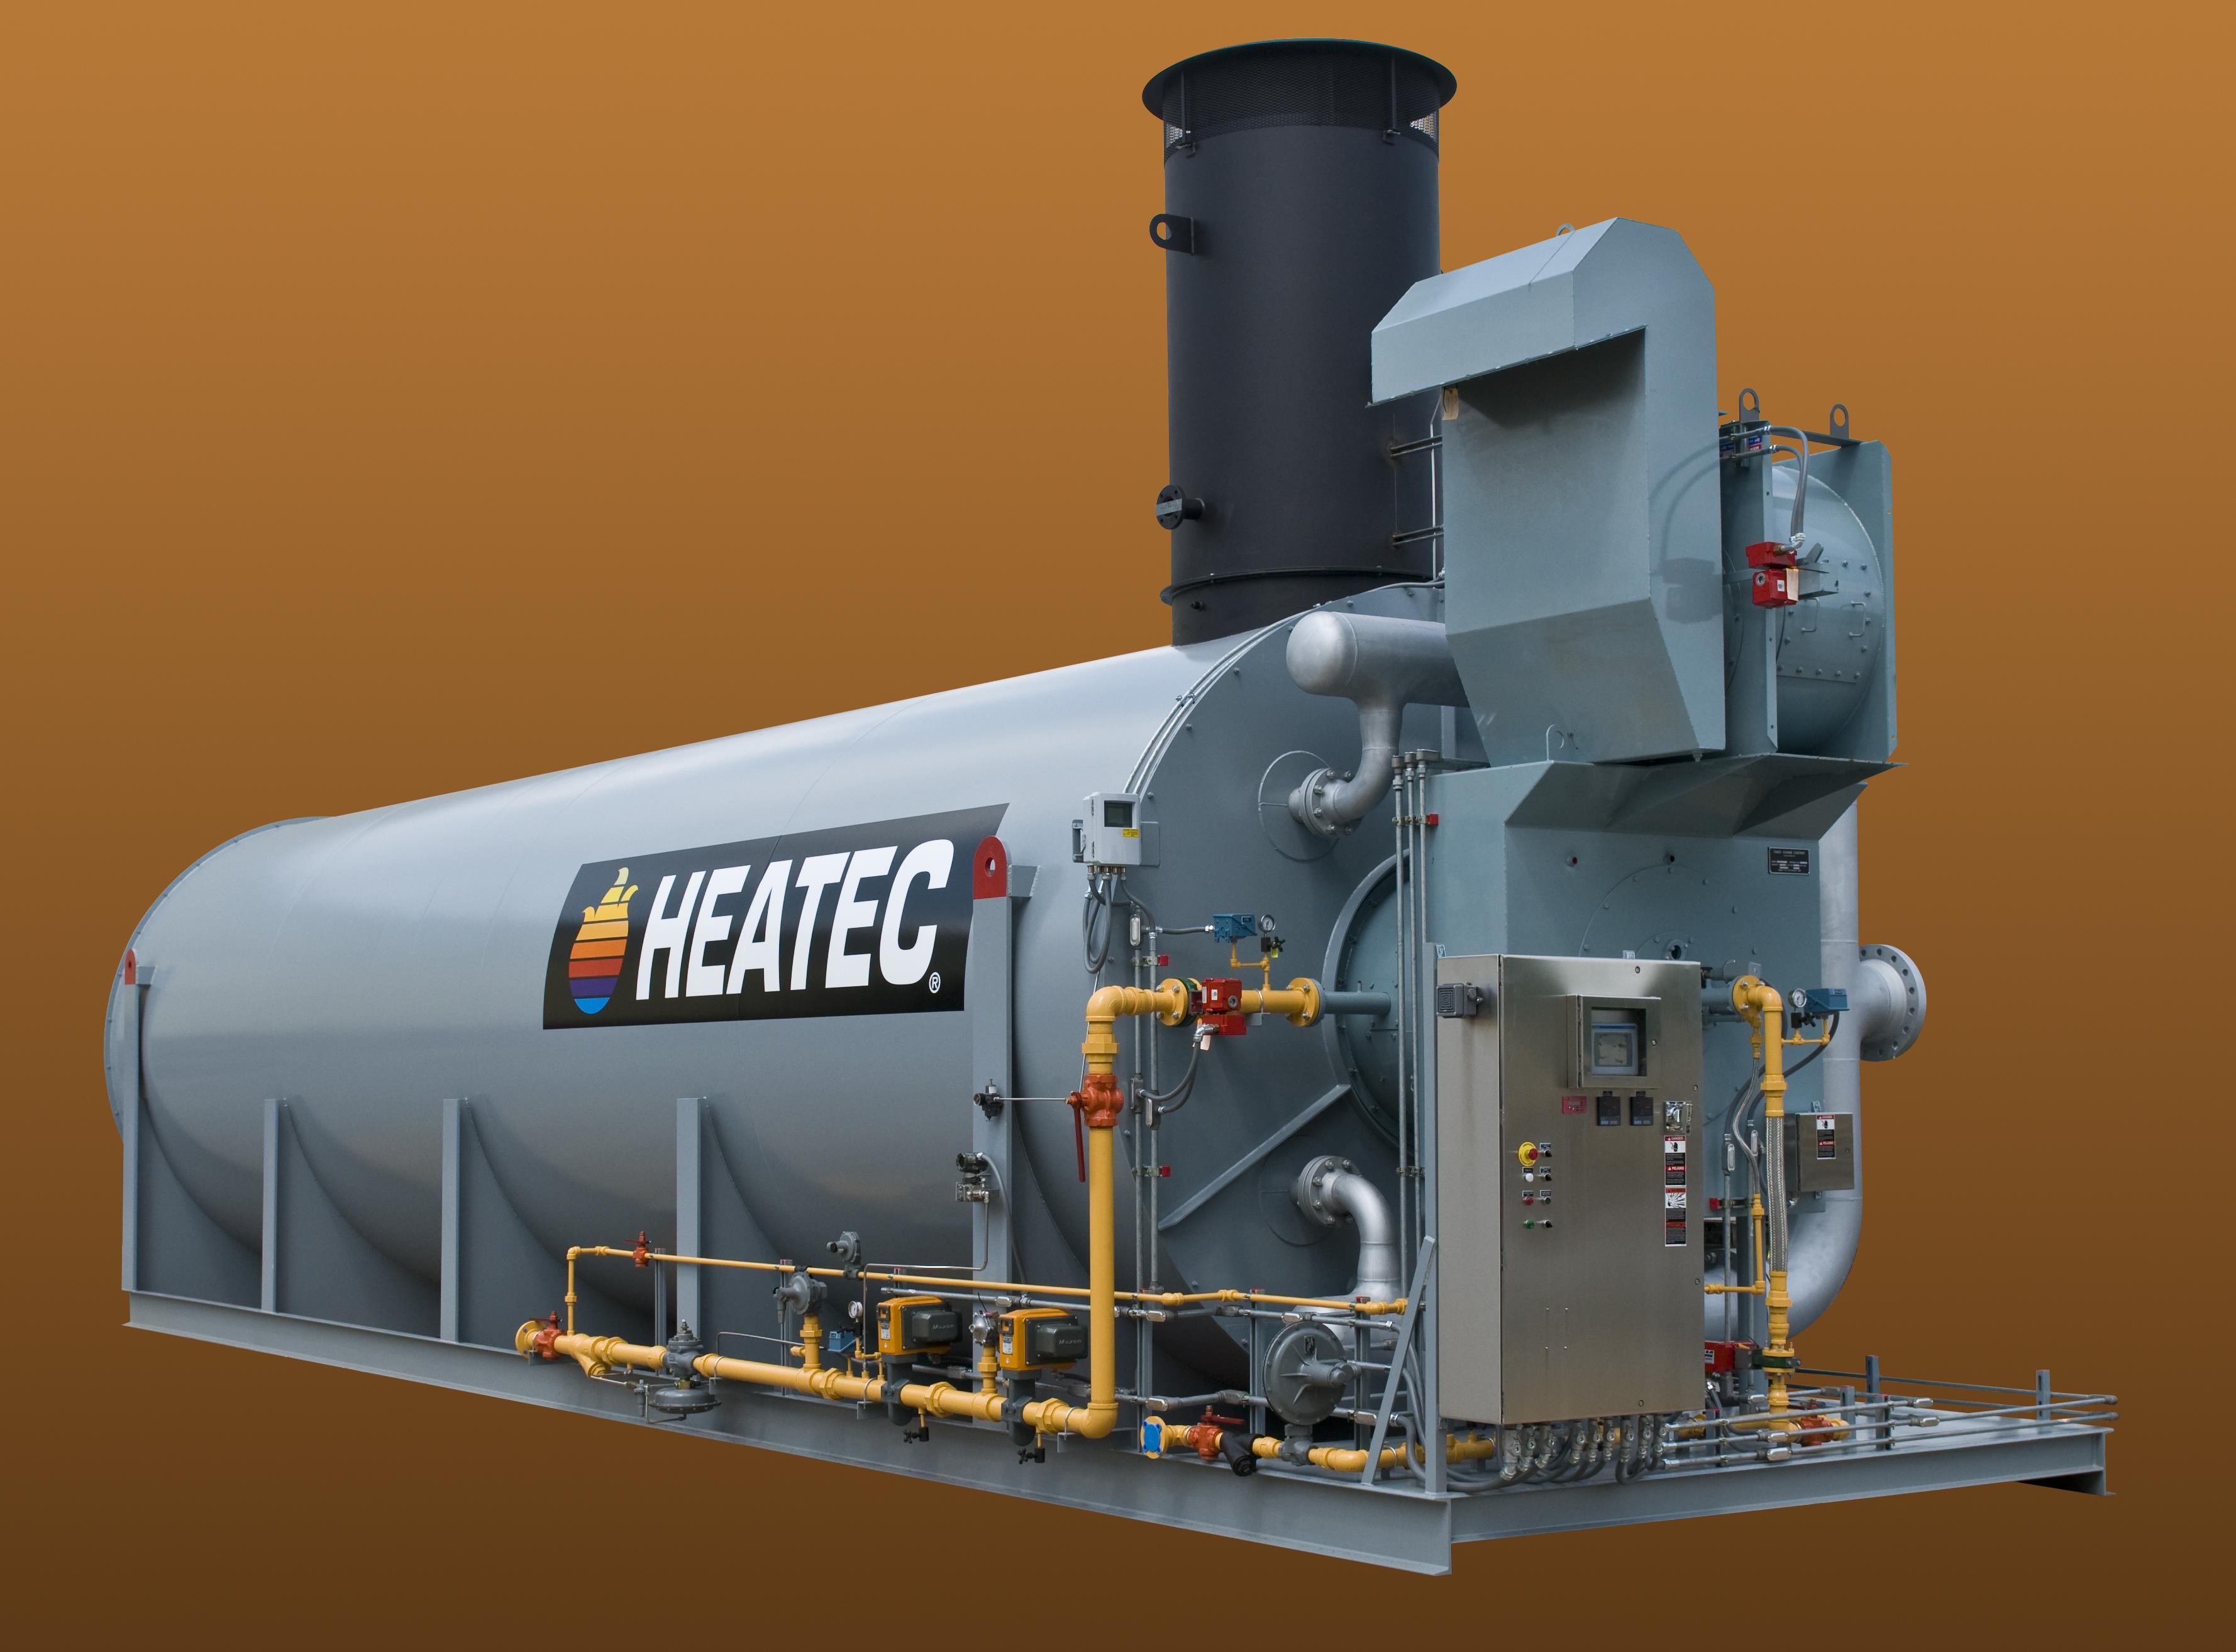 Heatec helical coil heater